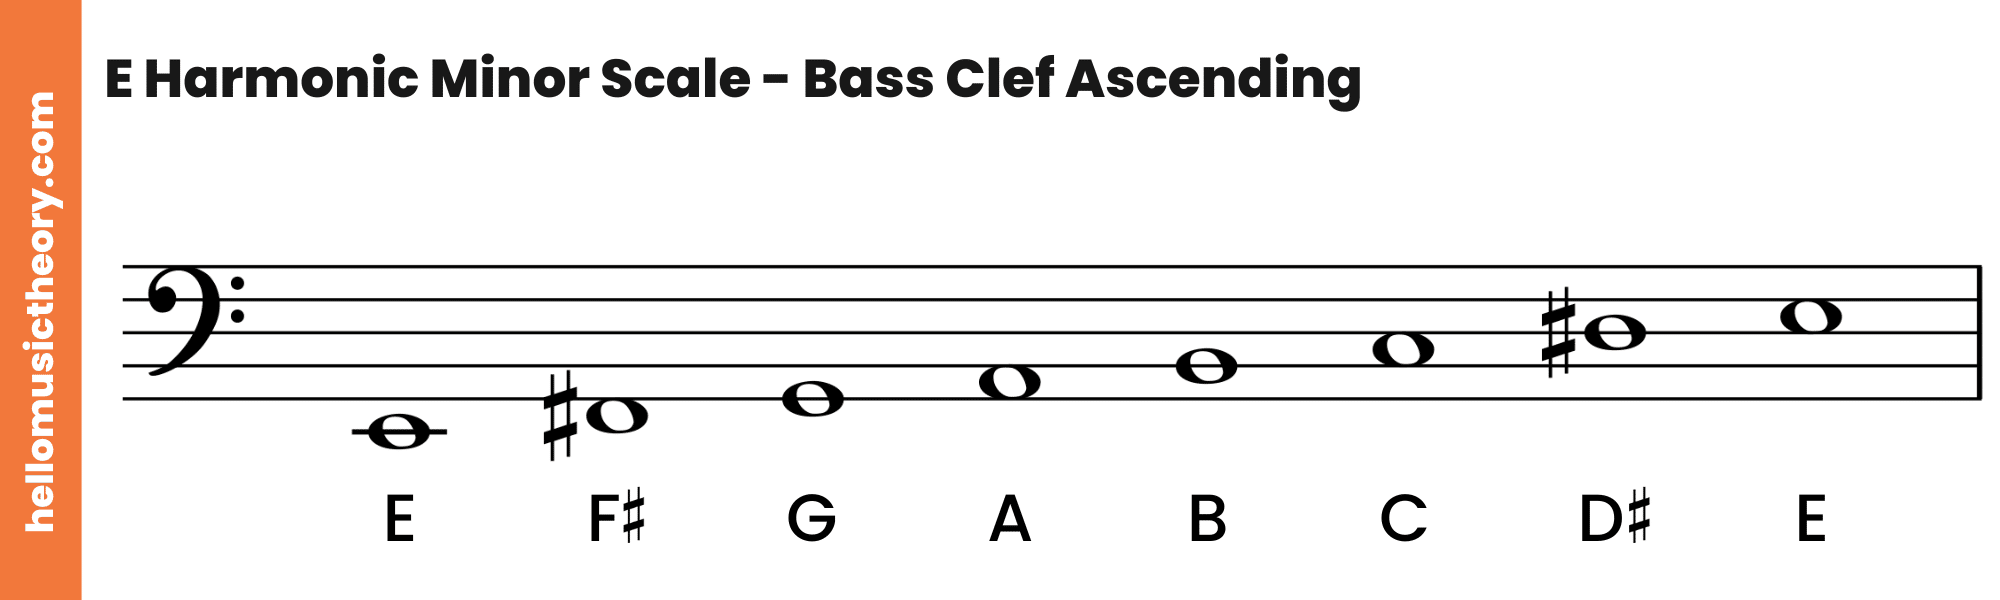 E Harmonic Minor Scale Bass Clef Ascending